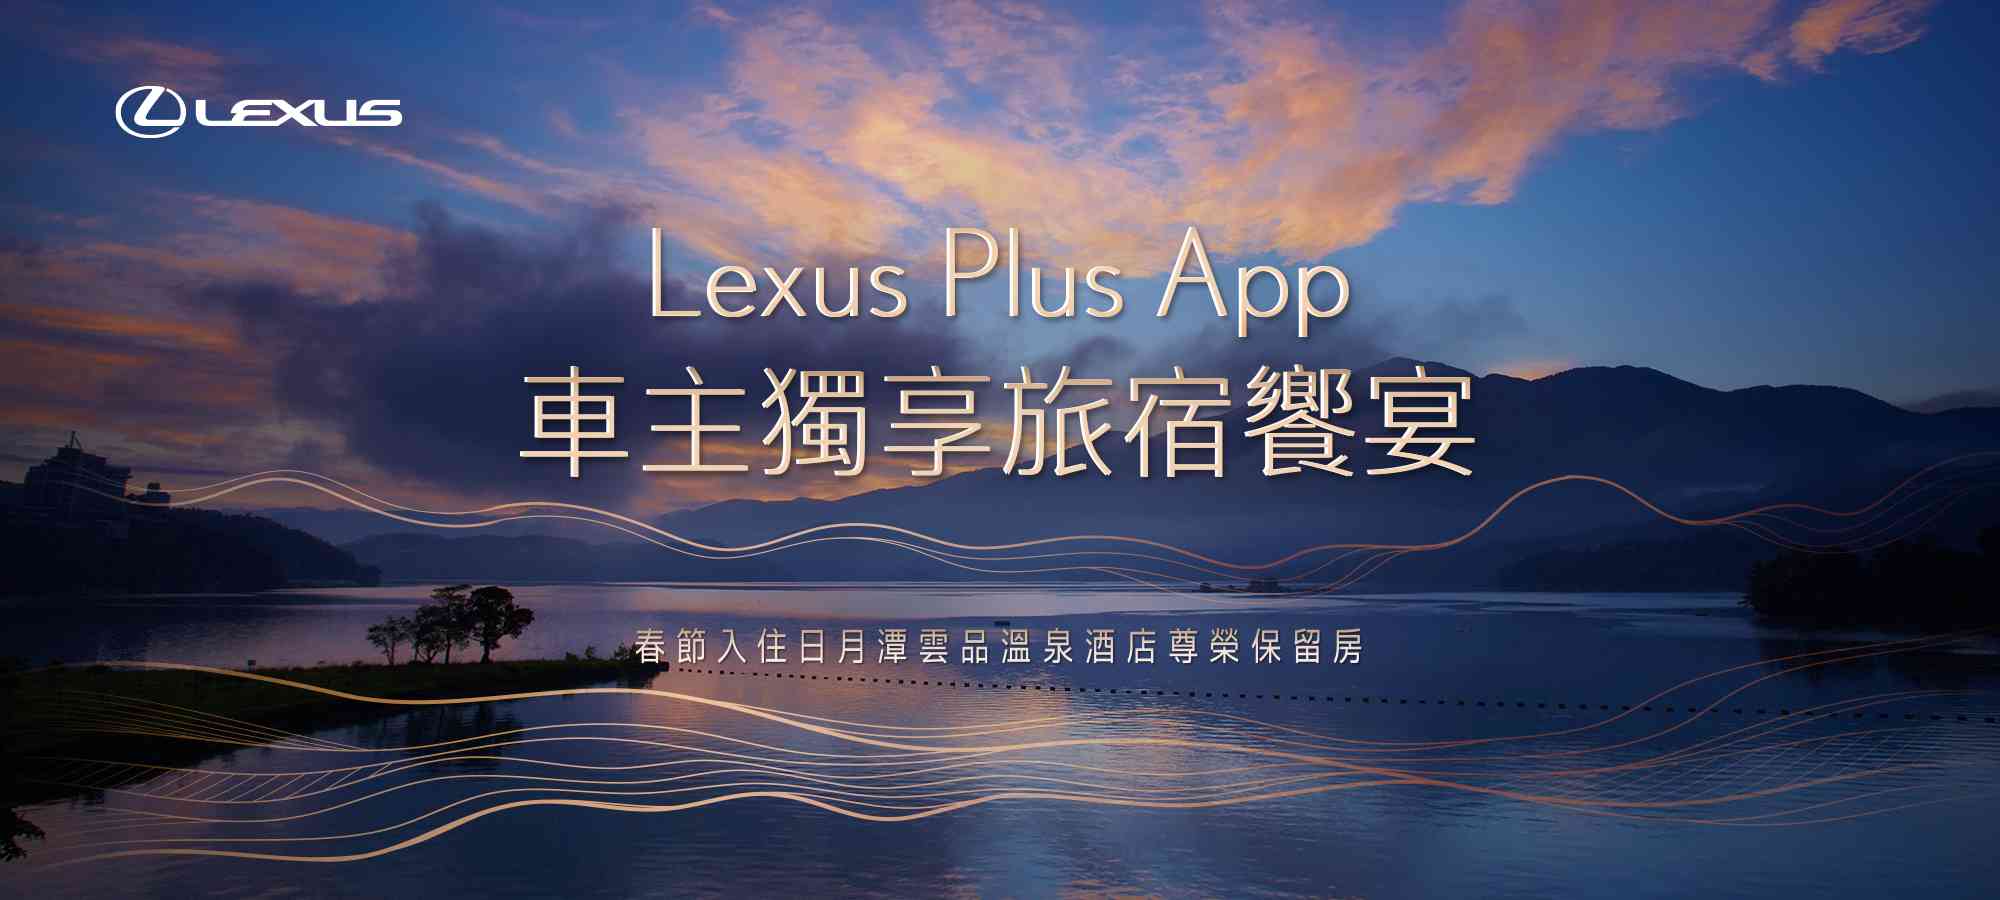 Lexus Plus App車主獨享旅宿饗宴 春節入住日月潭雲品溫泉酒店尊榮保留房